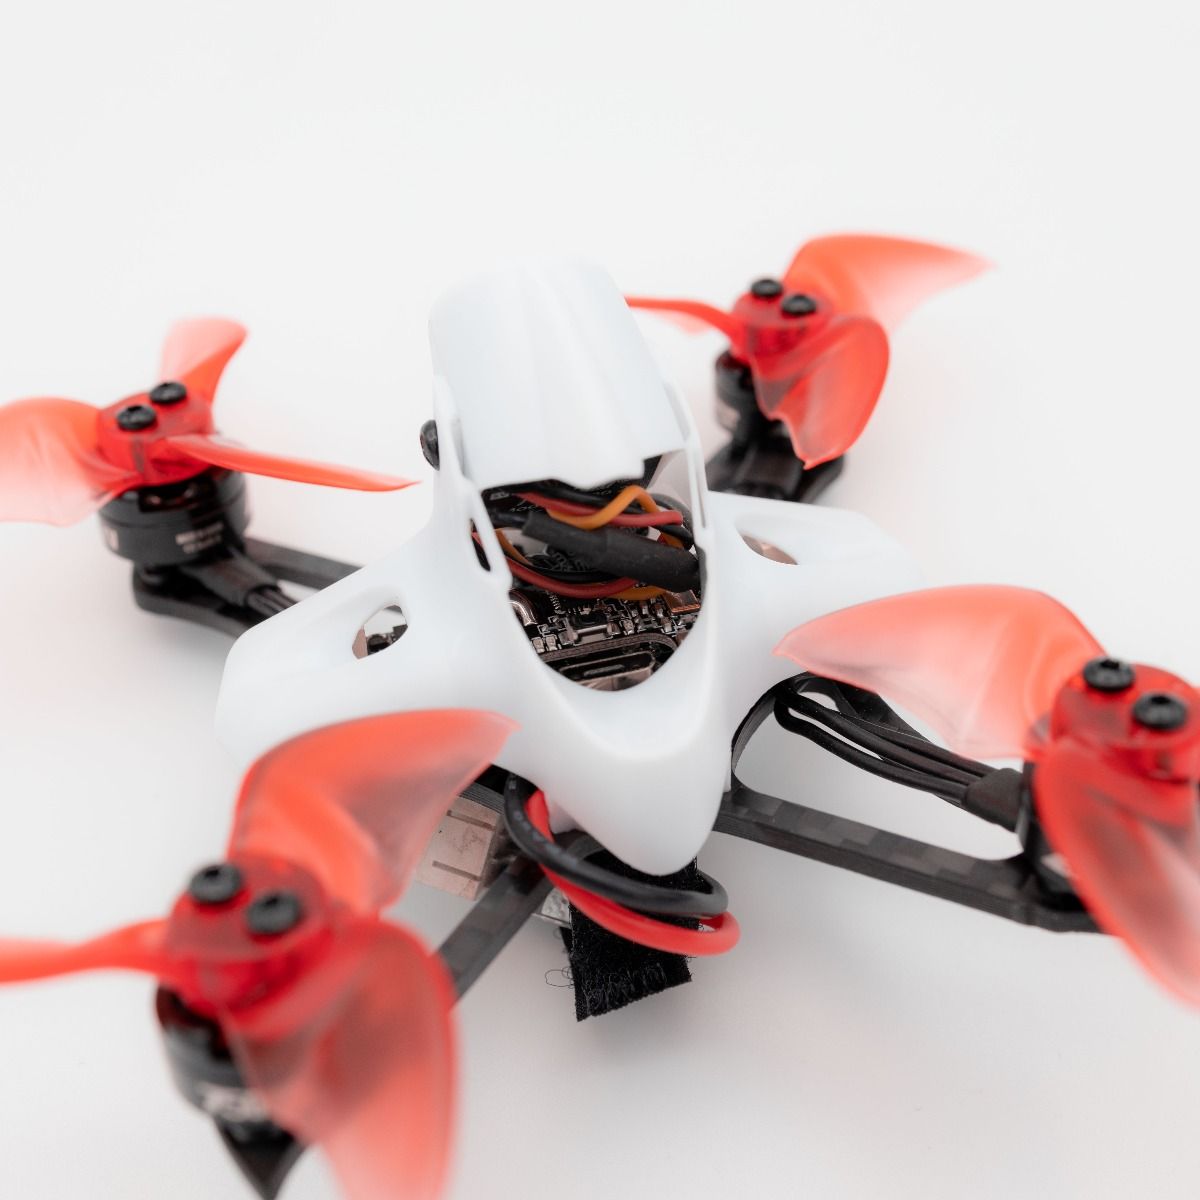 EMAX Tinyhawk II Race 2inch FPV Racing Drone